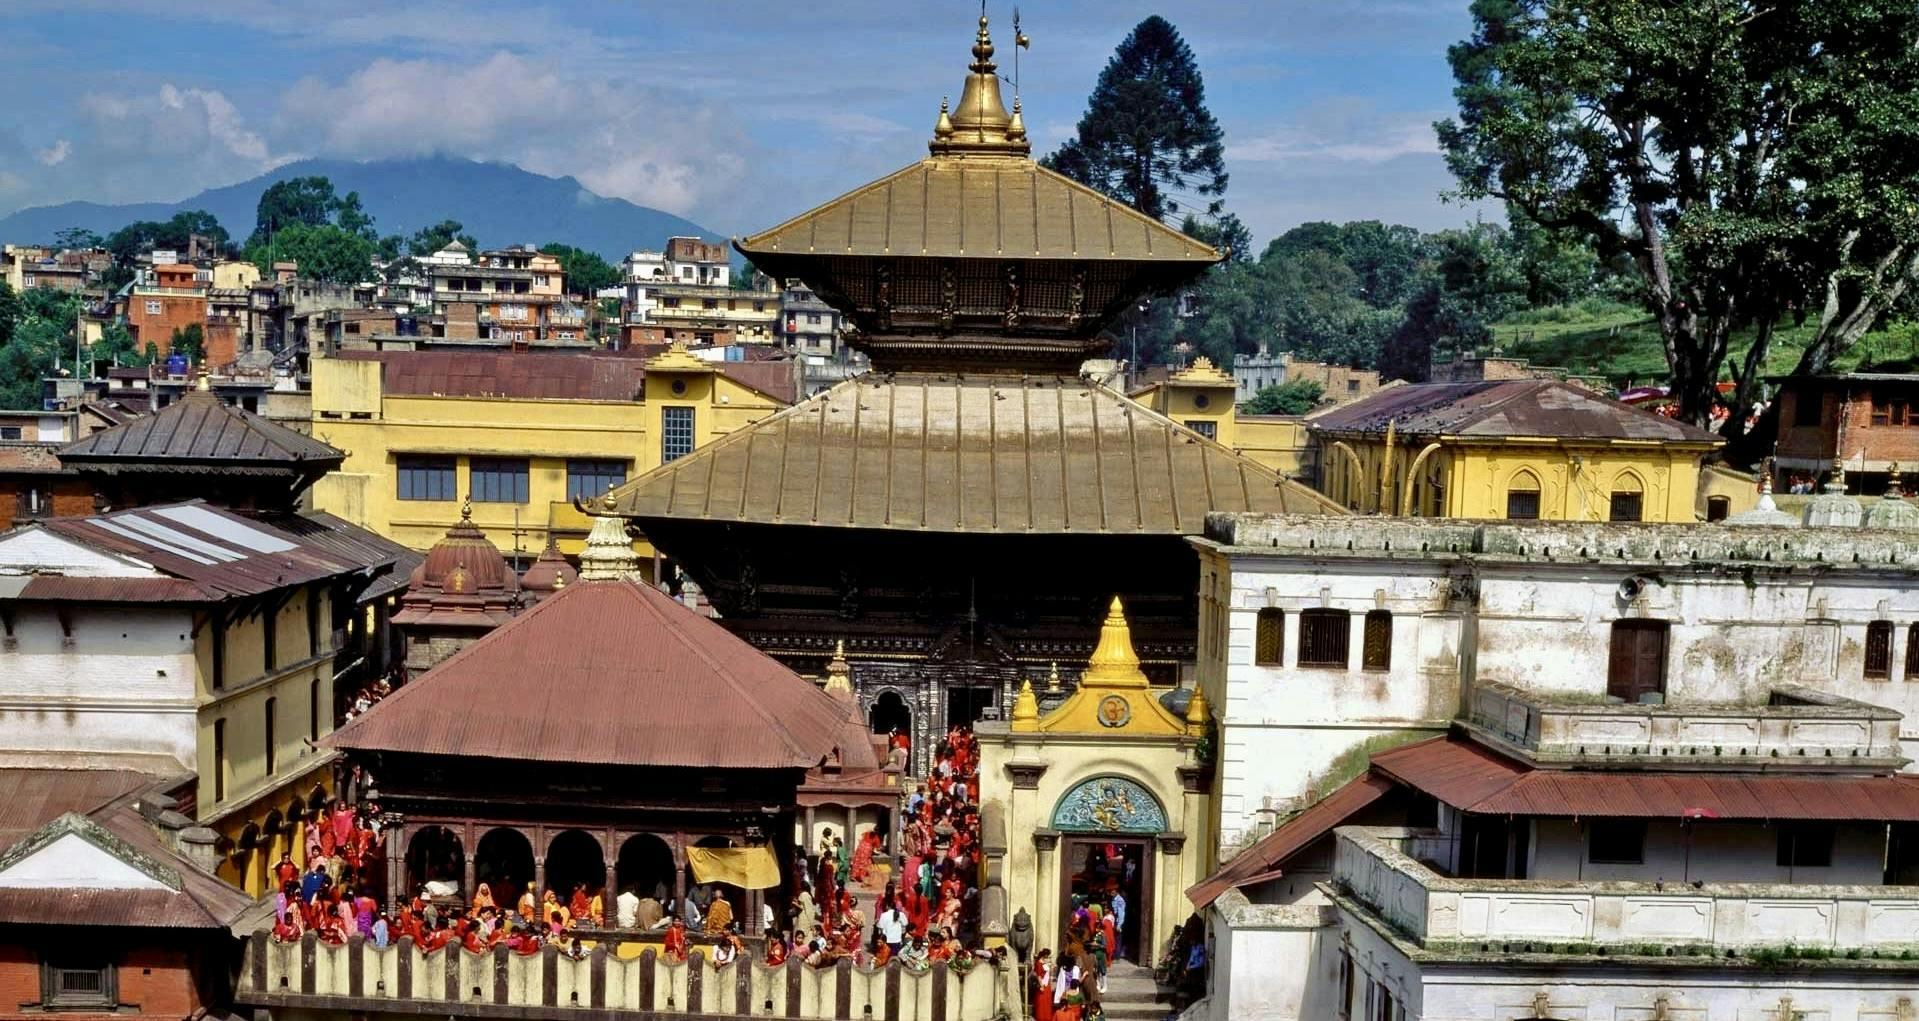 6 days Nepal tour with Pokhara and Safari